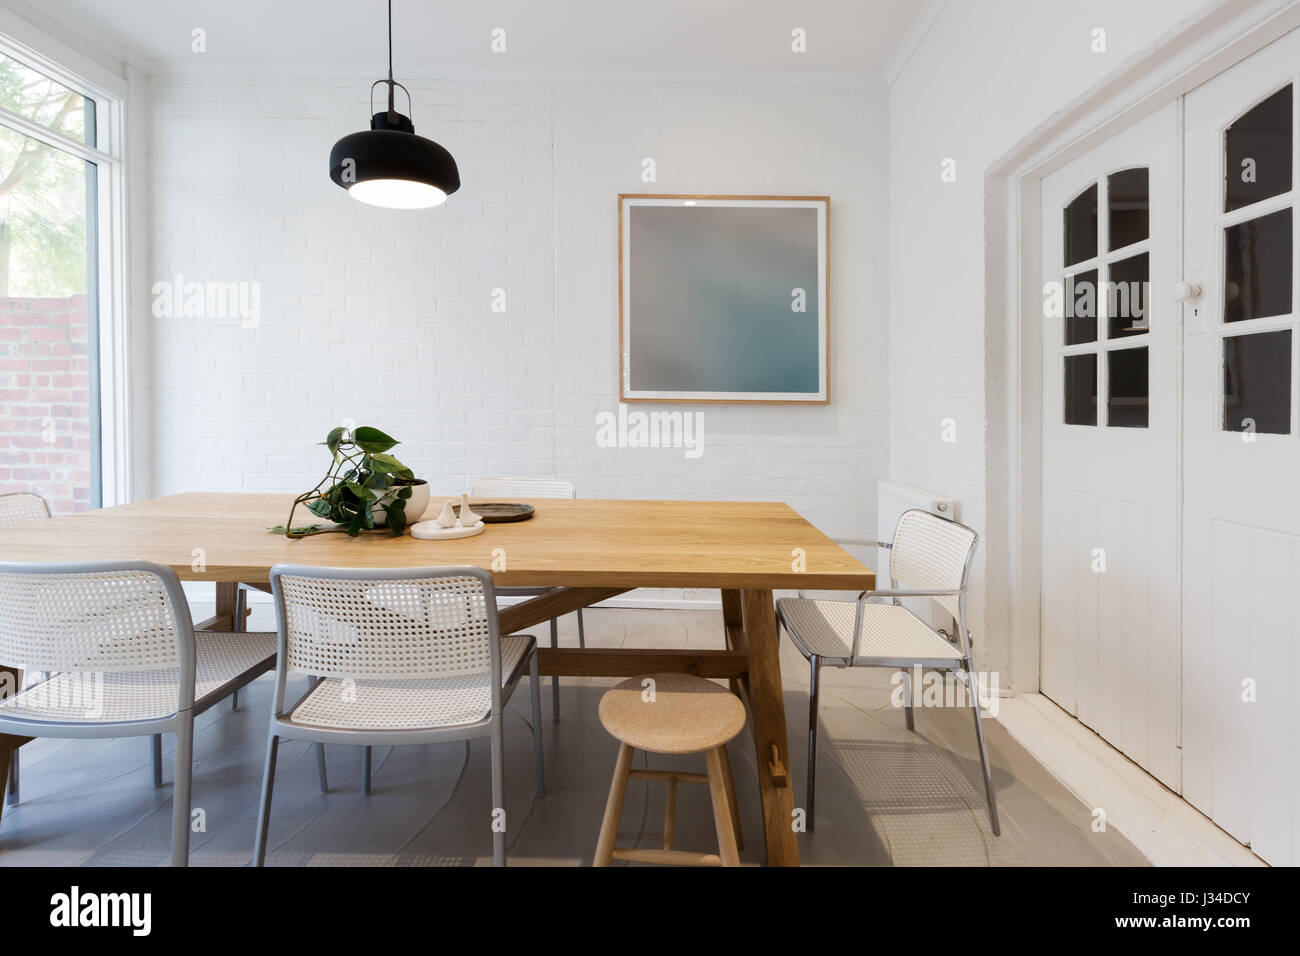 Modern scandinavian styled interior dining room with pendant light in Australia horizontal Stock Photo